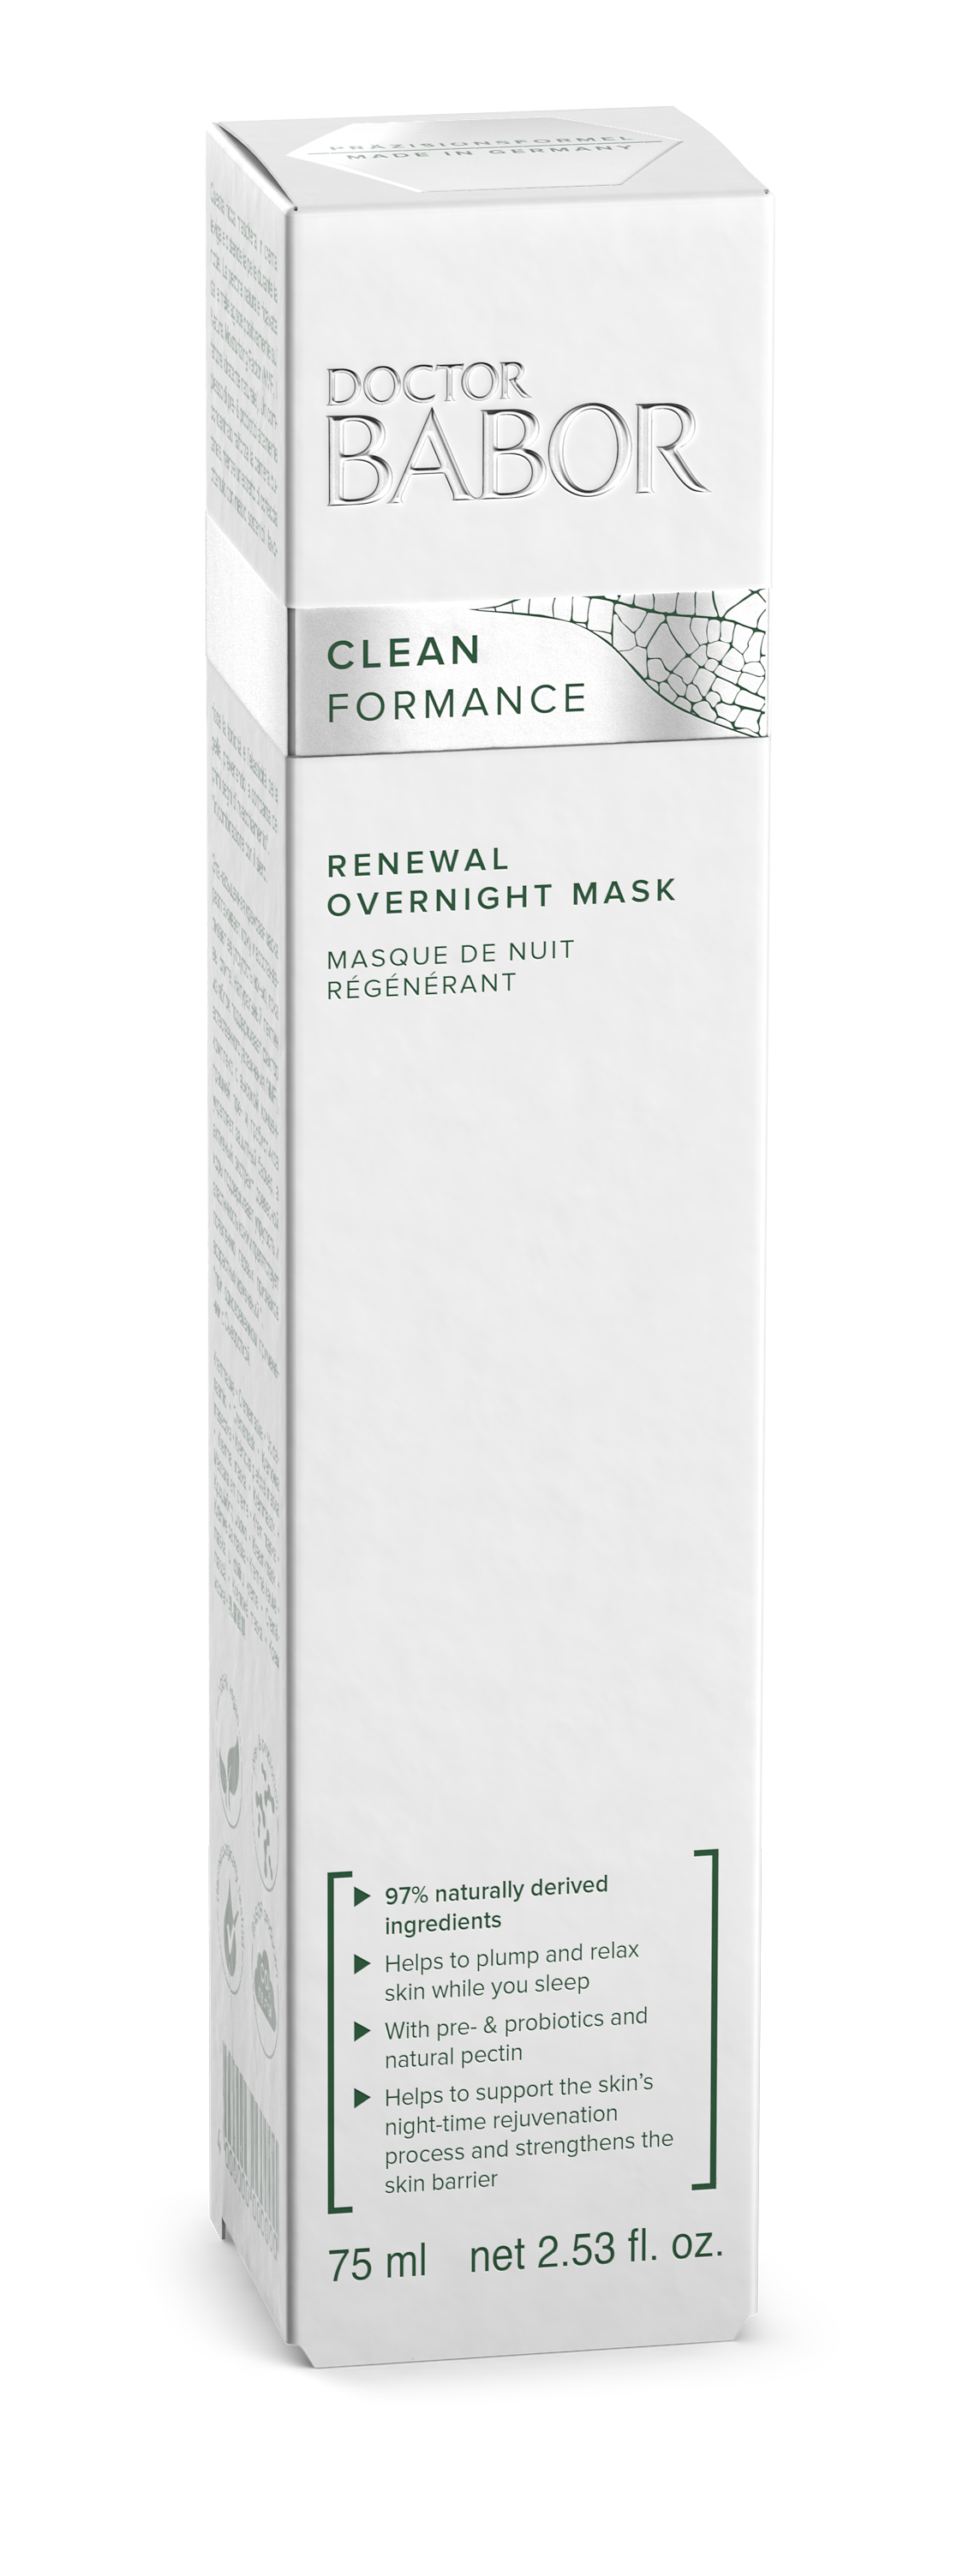 Babor Renewal Overnight Mask